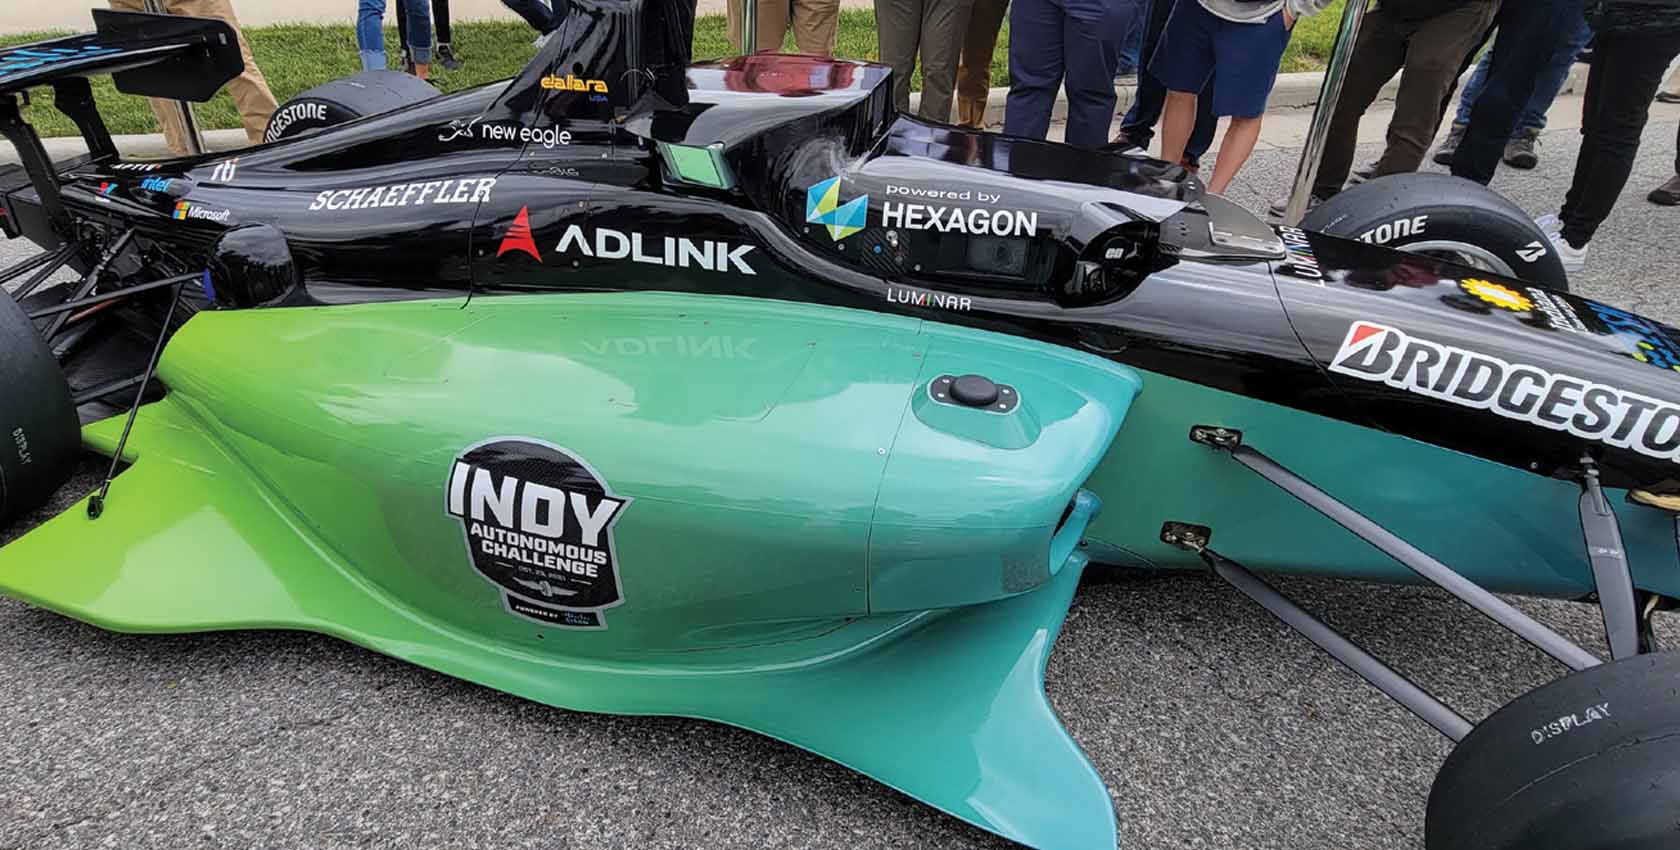 Racecar - AV-21 Dallara - Indy Autonomous Challenge - Official Website